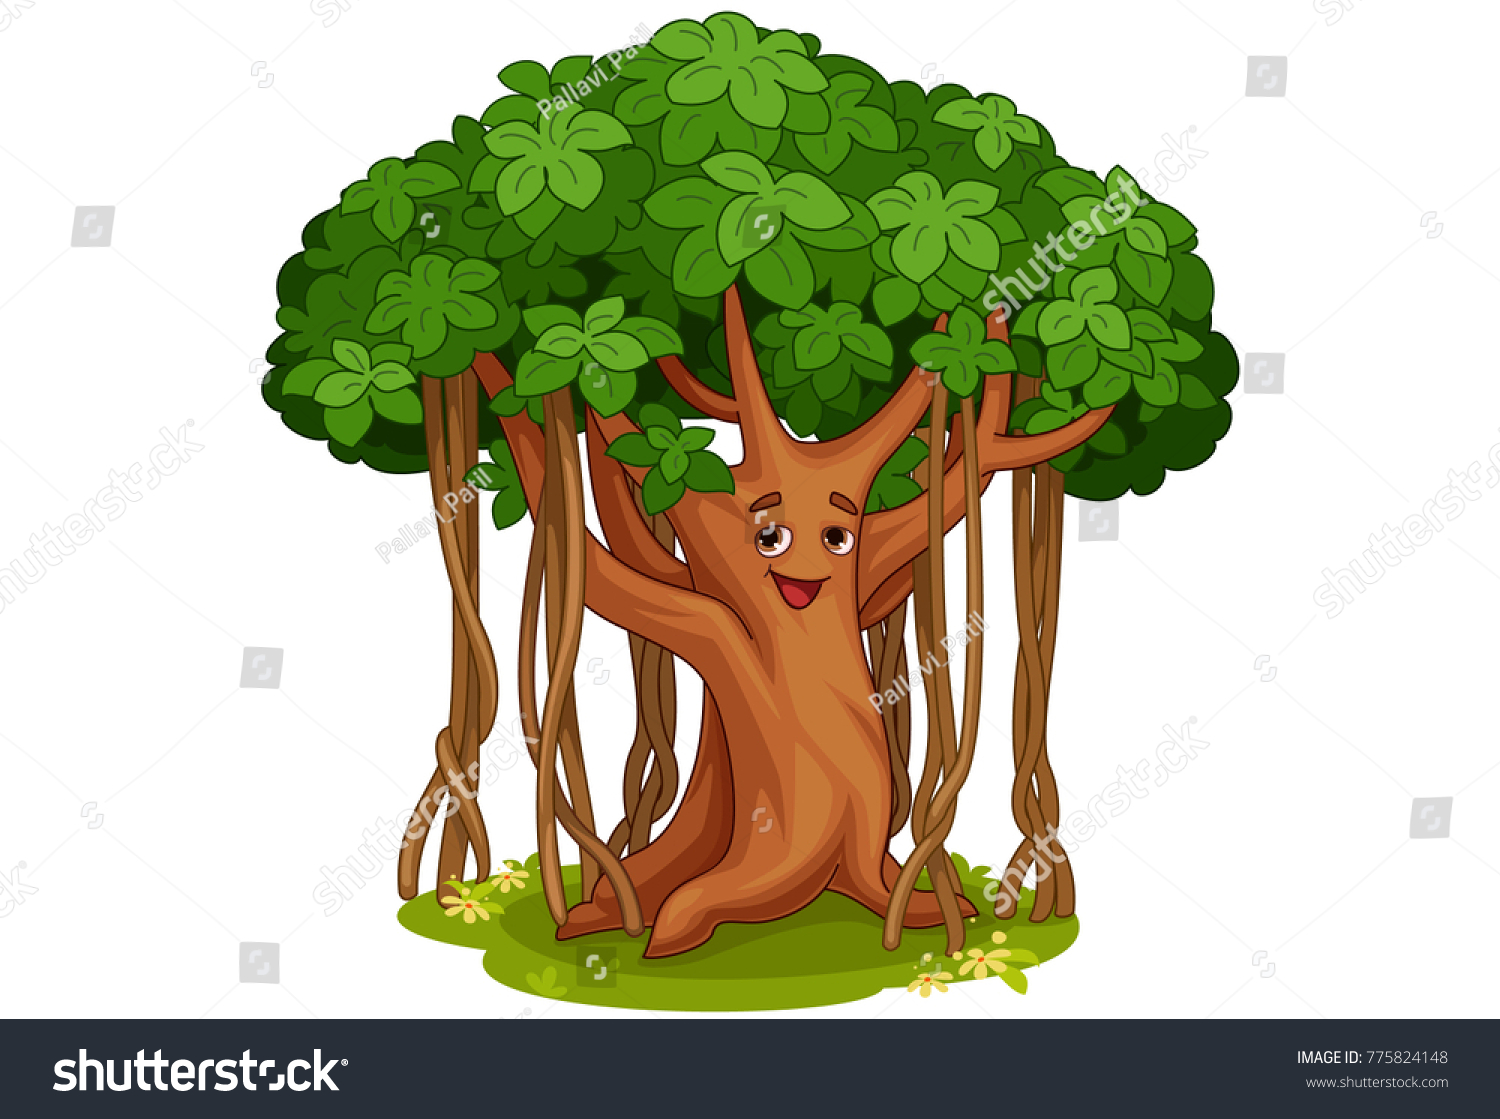 SVG of Cute banyan tree cartoon illustration svg